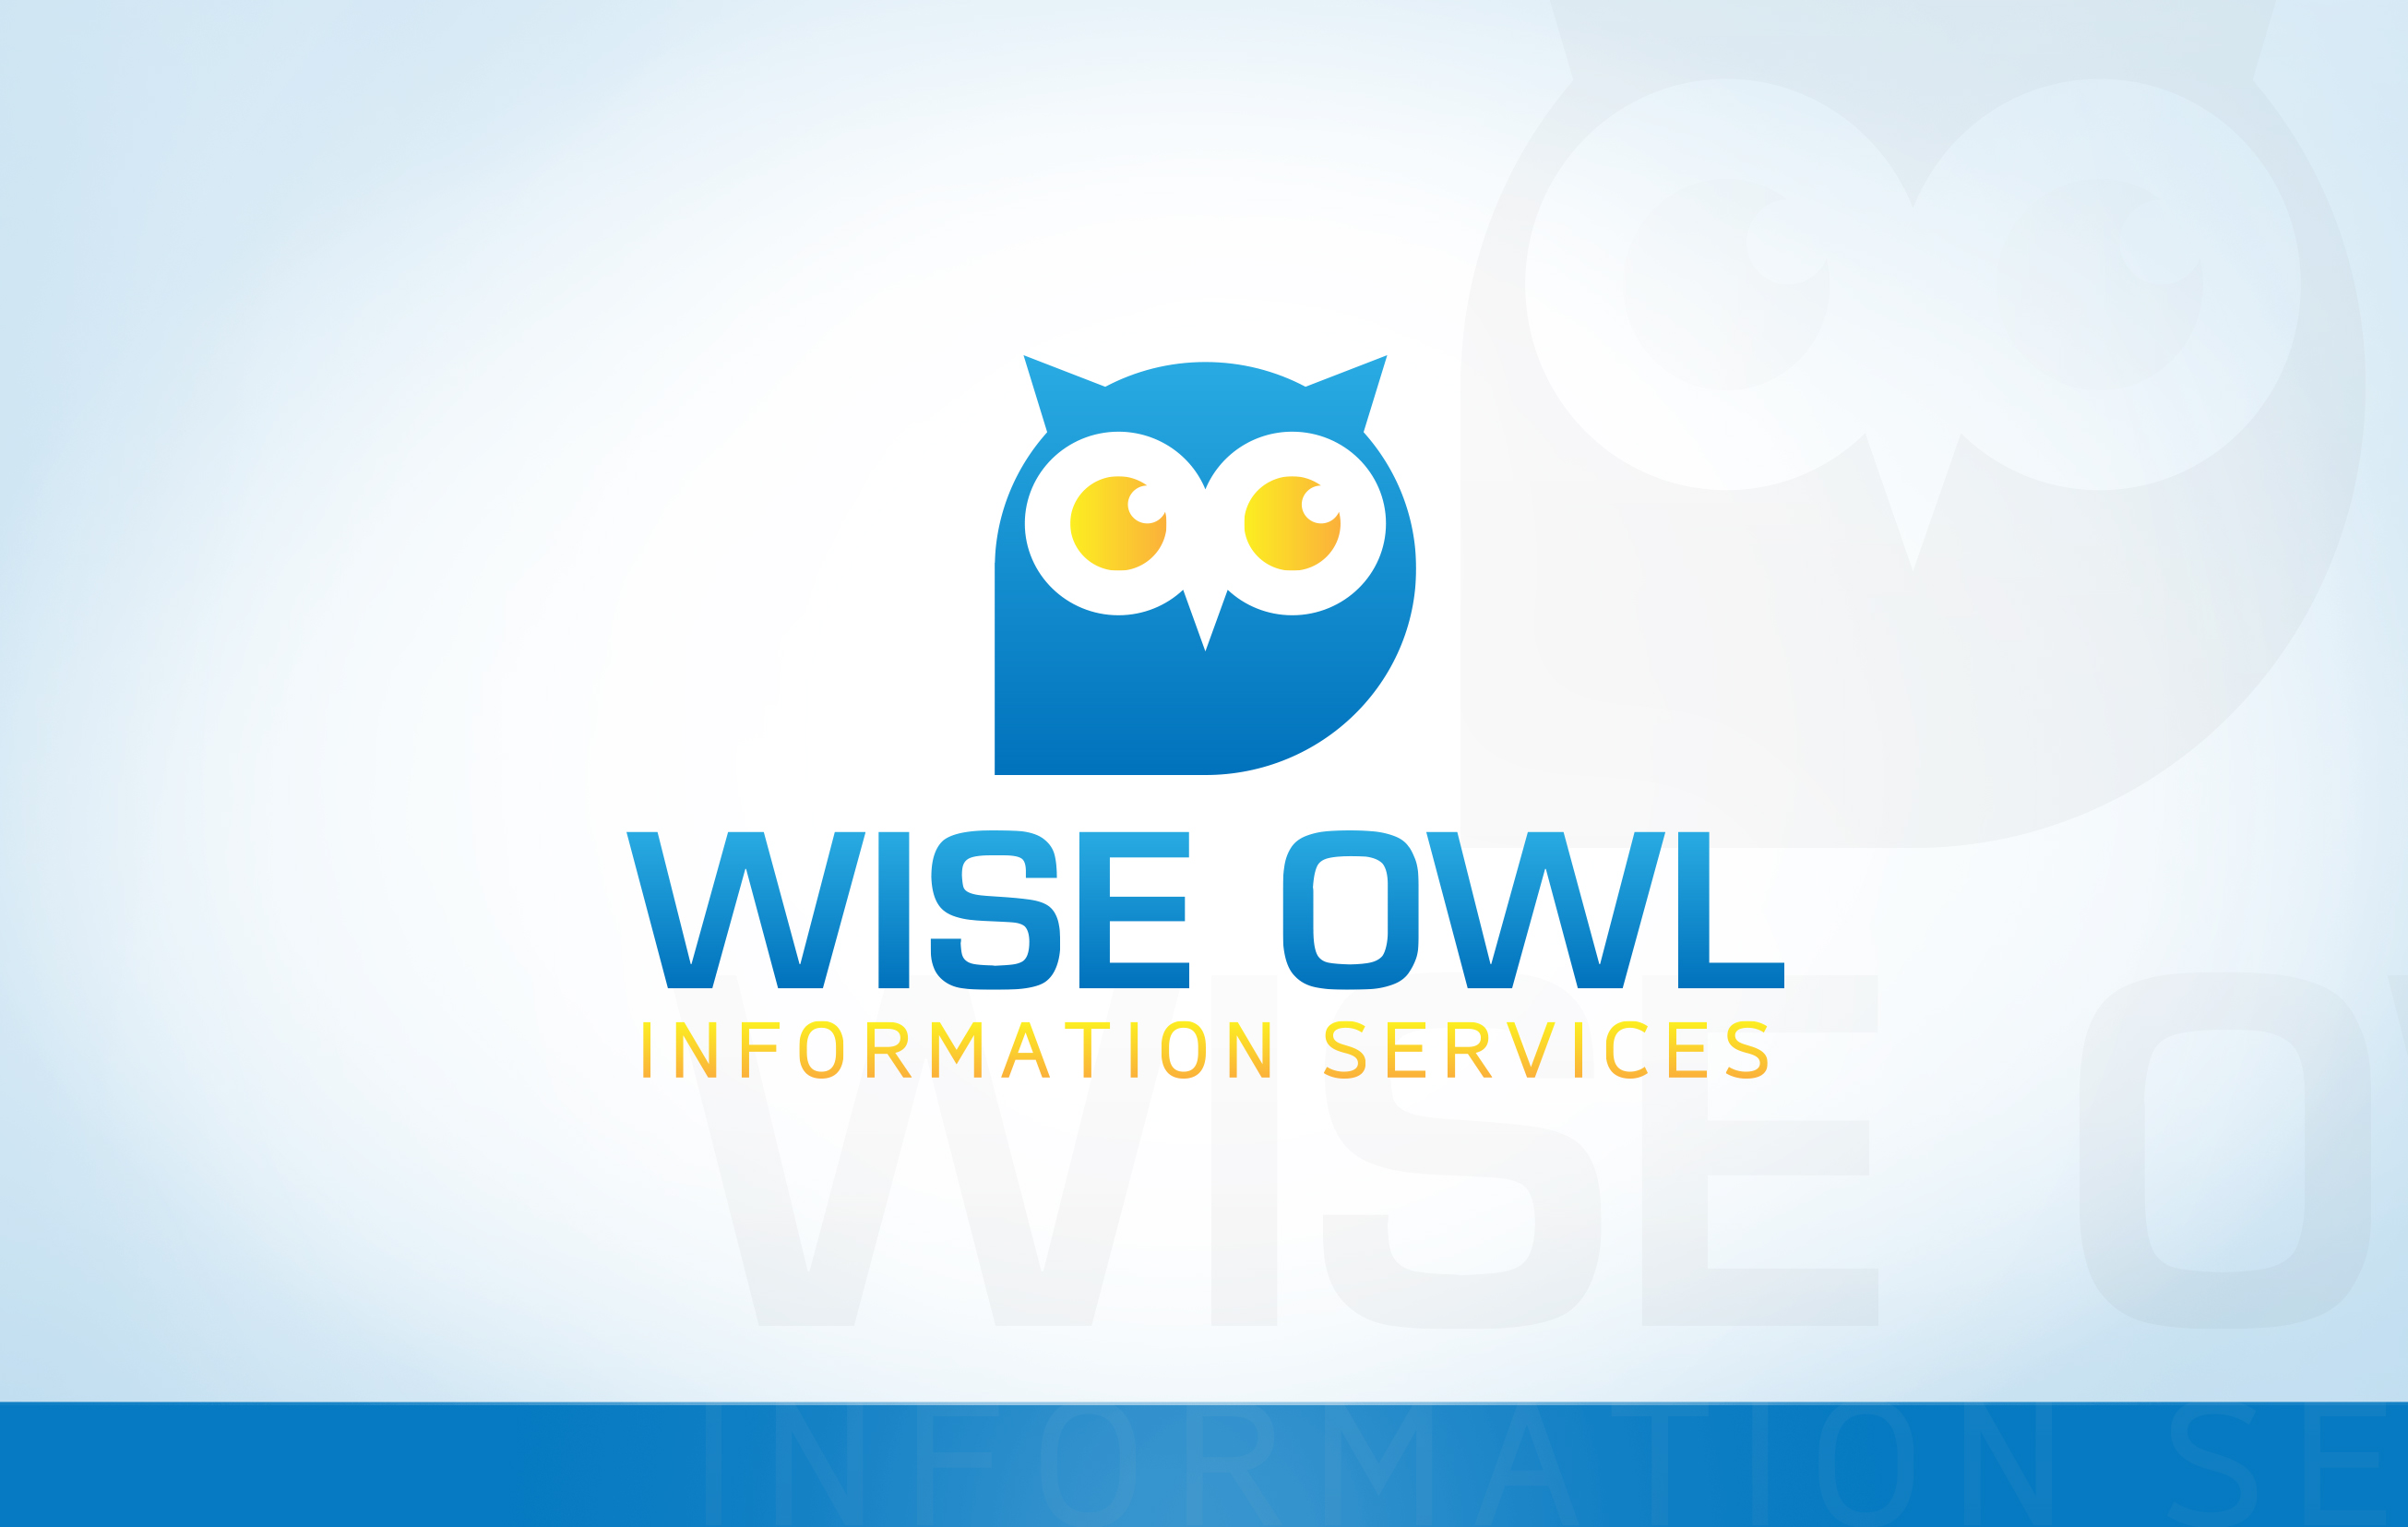 Wise Owl Information Services Design #3